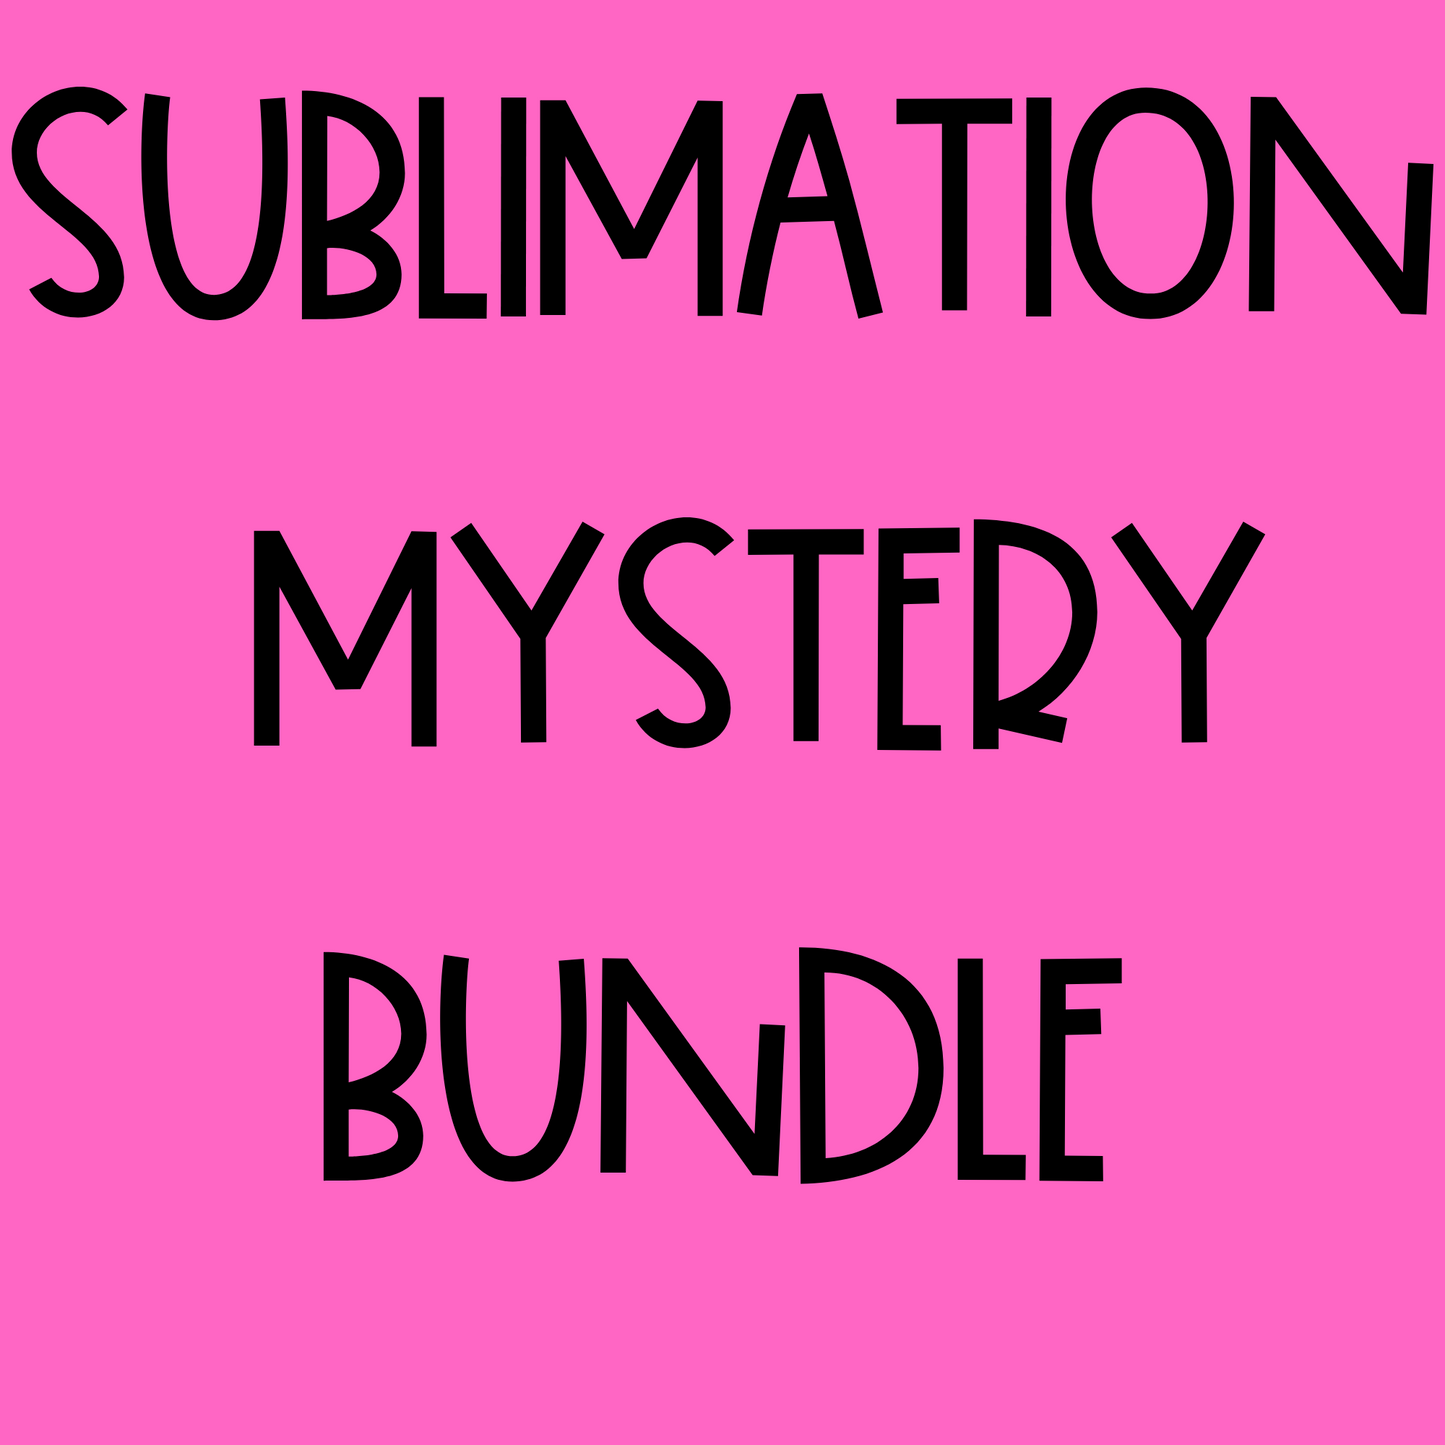 MYSTERY BUNDLE: Sublimation